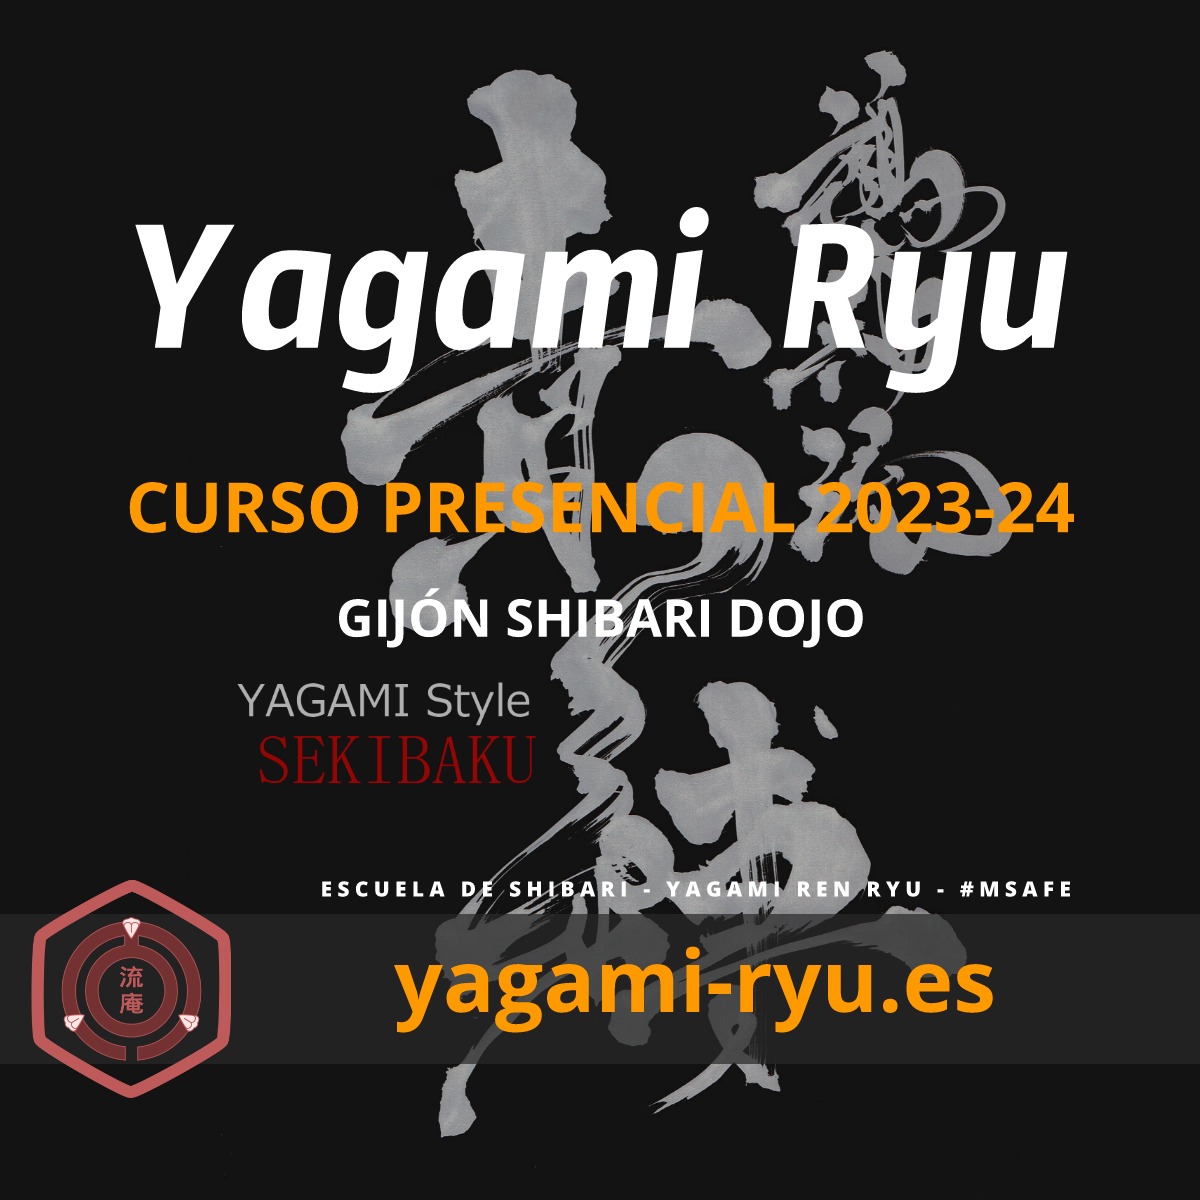 Curso presencial Yagami Ryu